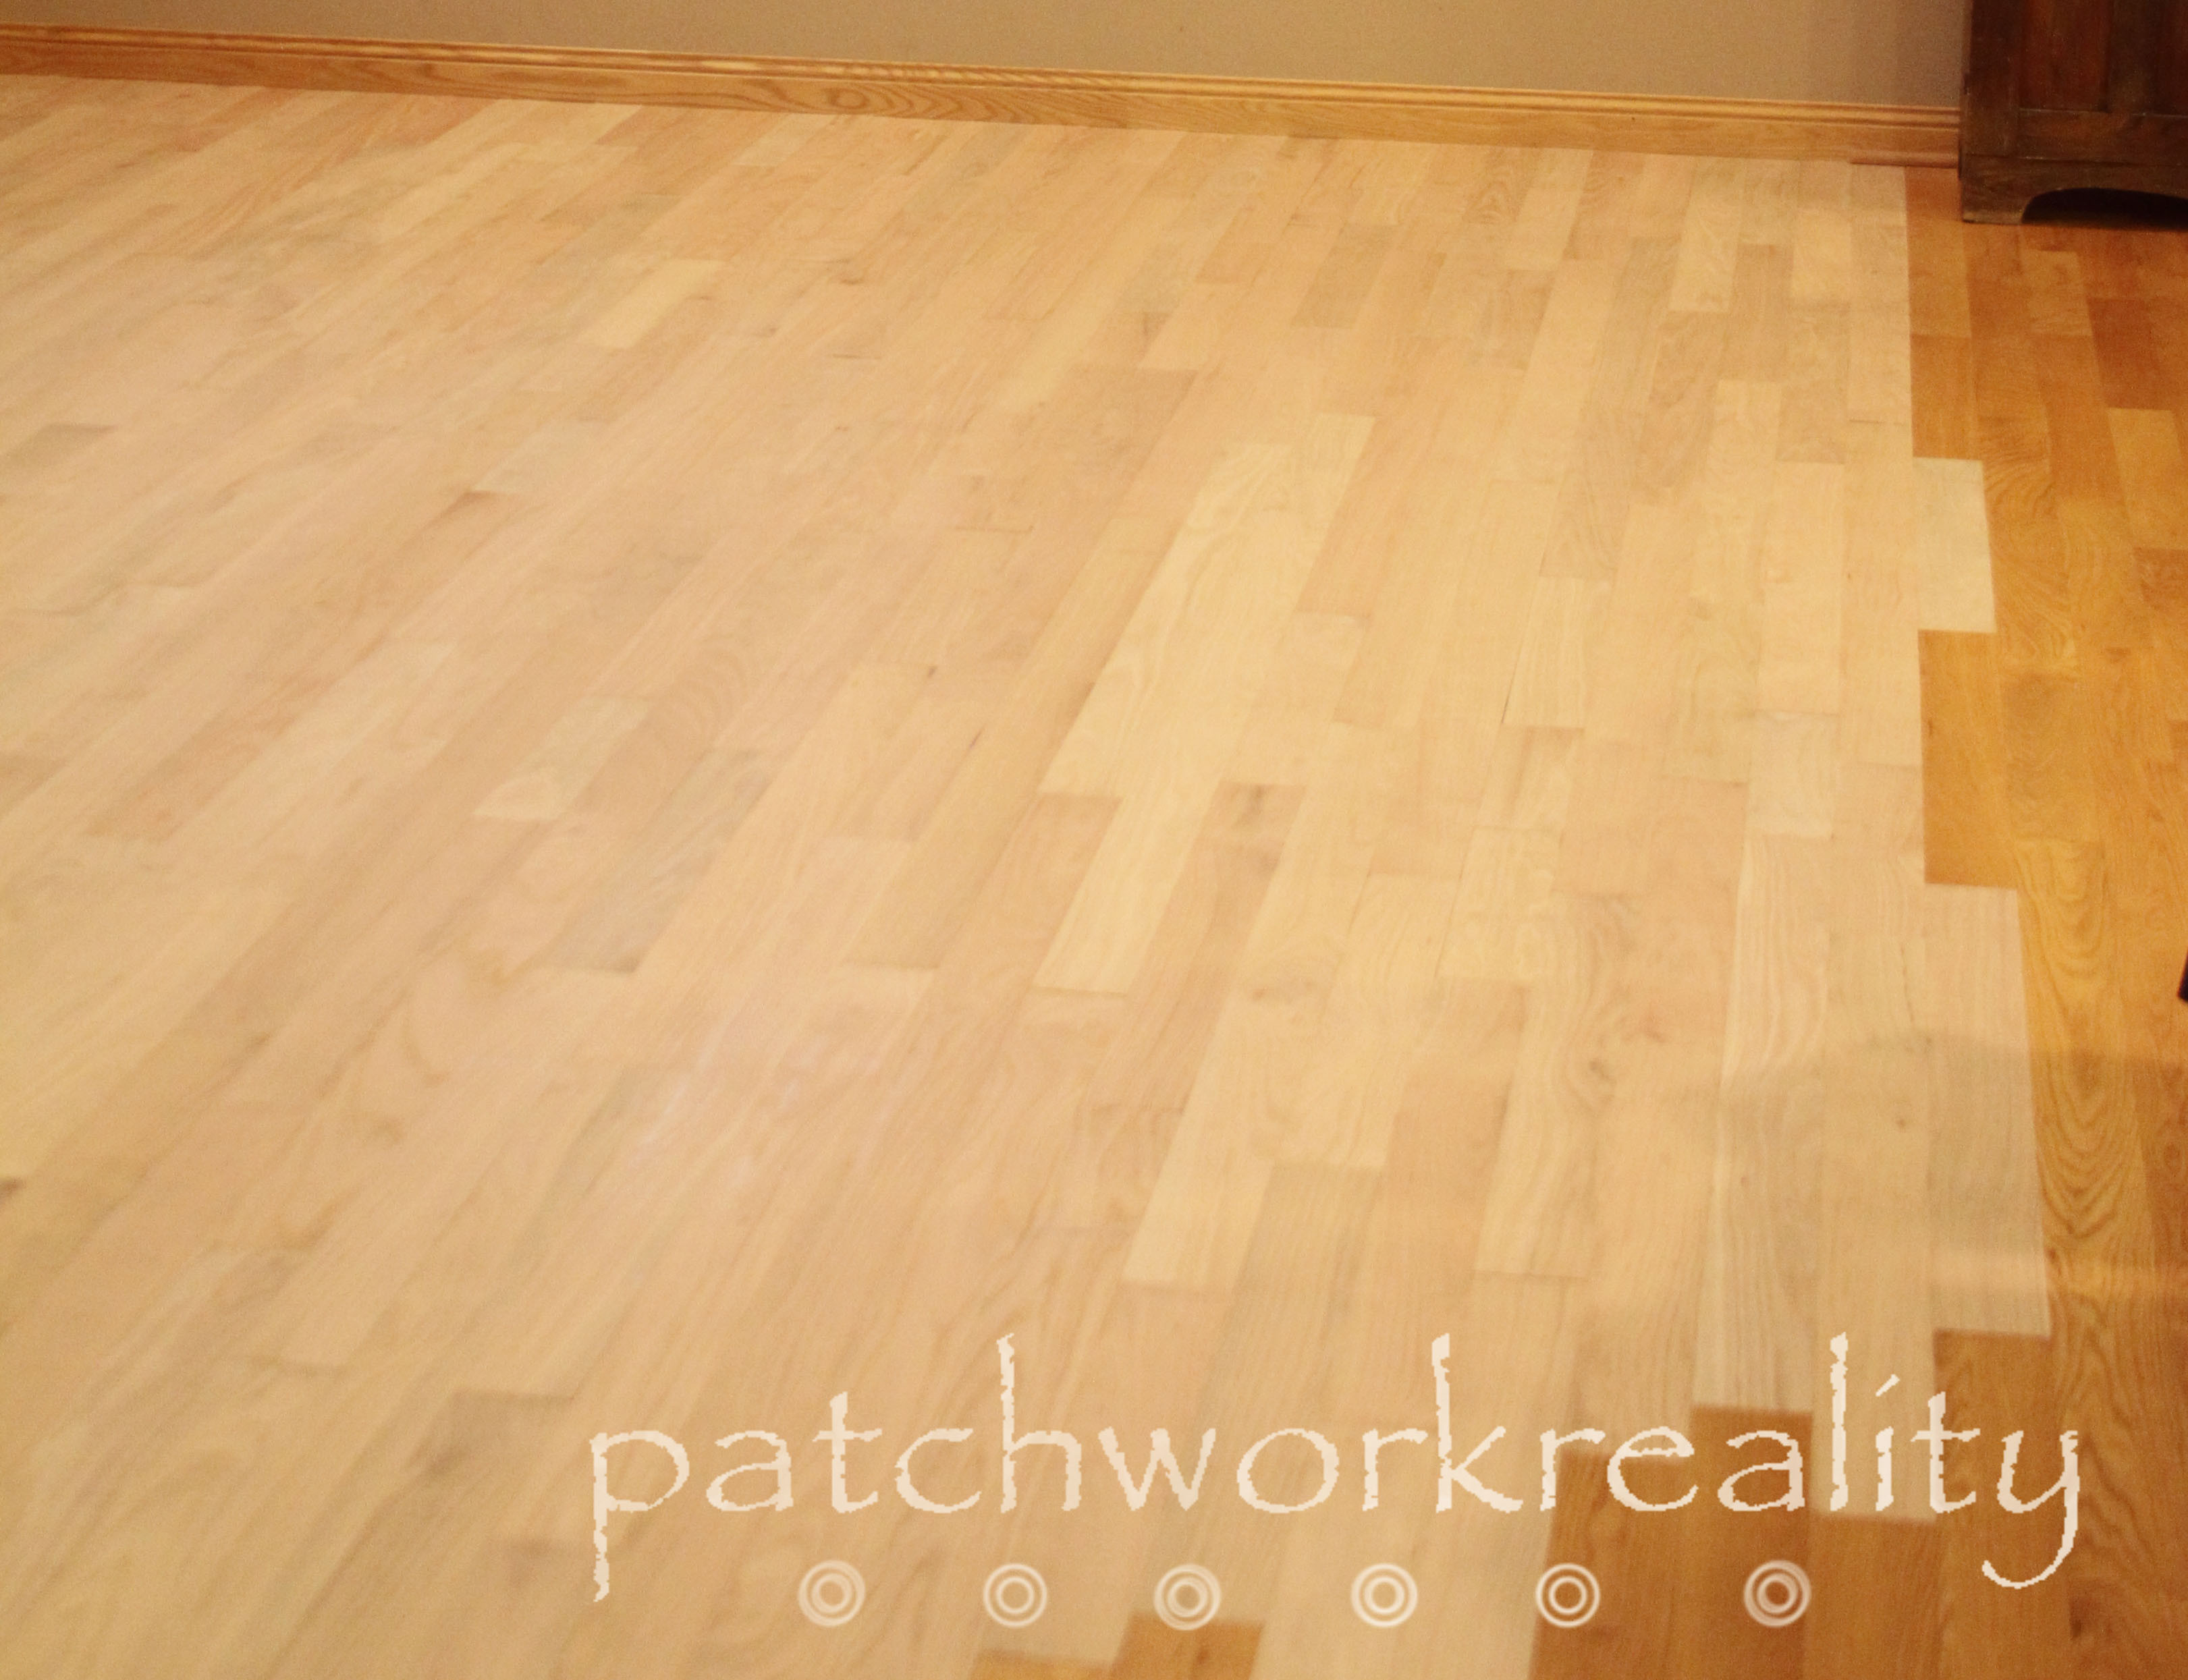 18 Stylish 1 1 4 Inch Hardwood Flooring 2024 free download 1 1 4 inch hardwood flooring of hardwood patchwork reality with oak flooring